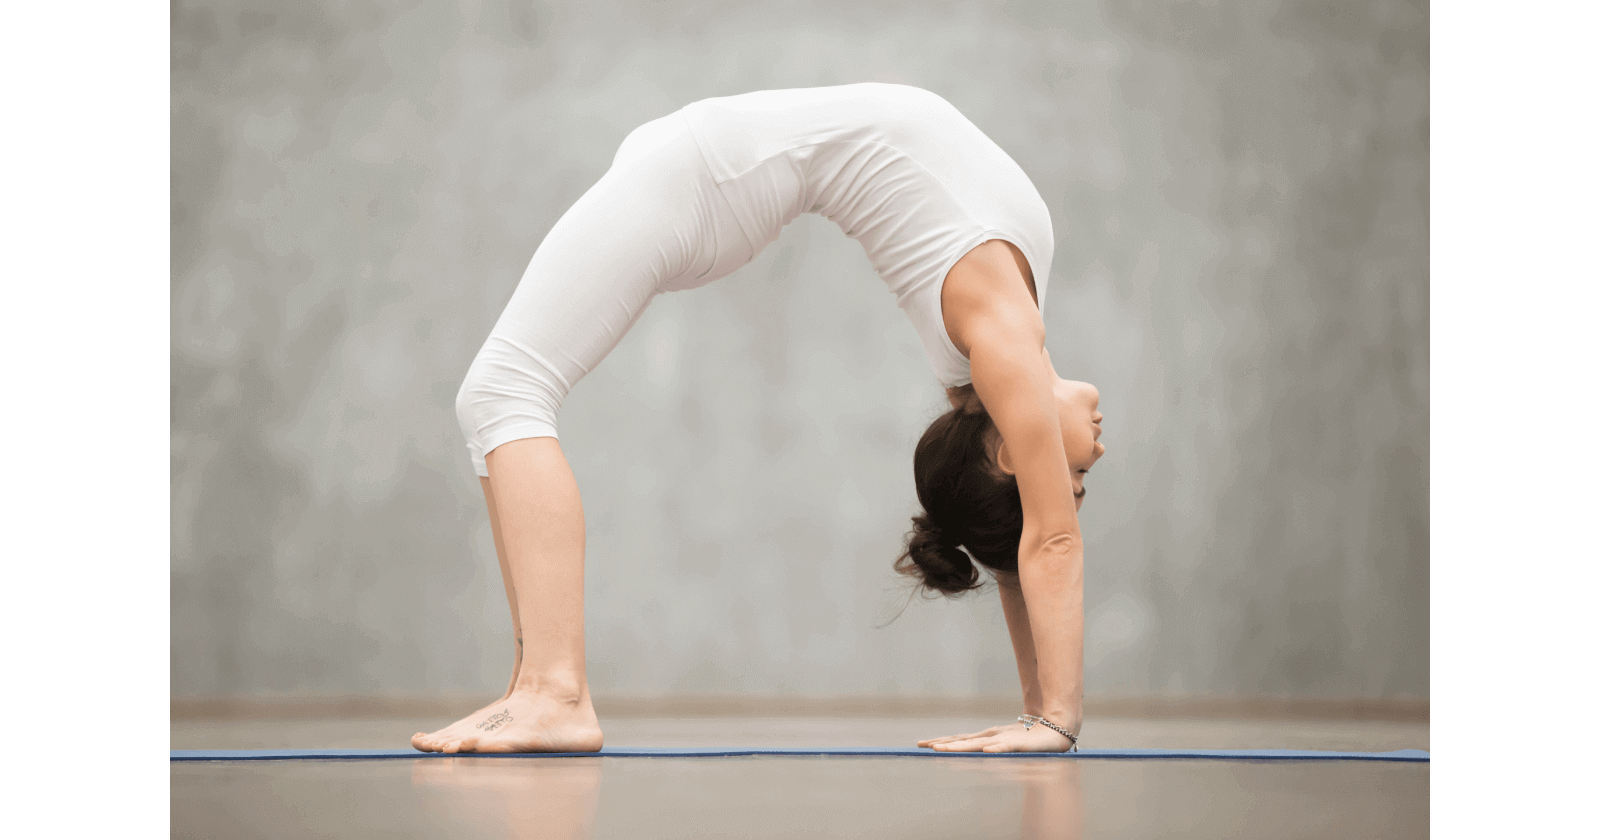 8 Standing Yoga Poses to Build Balance and Strength | SELF